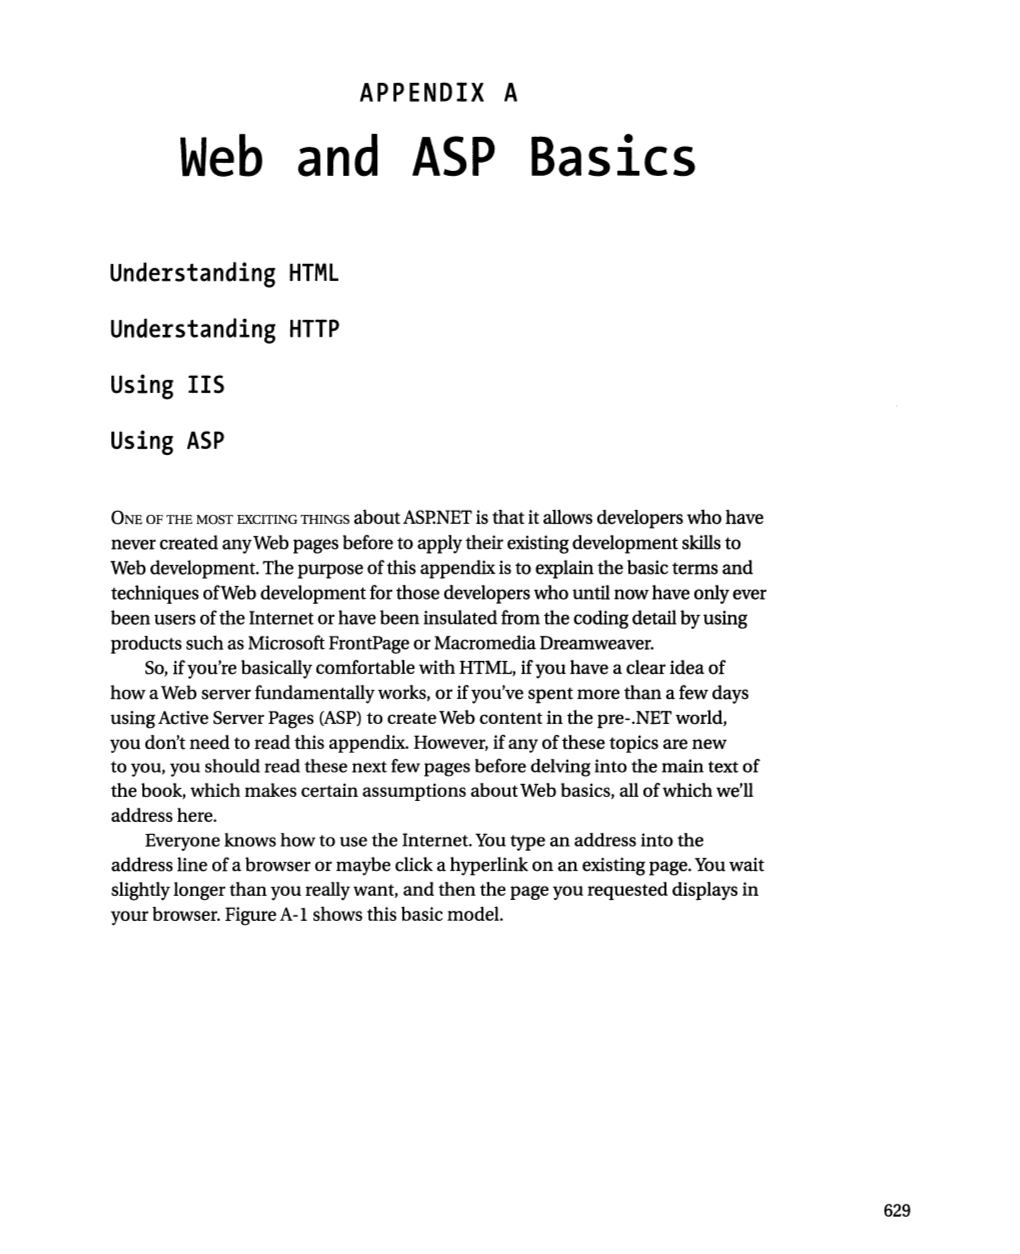 Web and ASP Basics